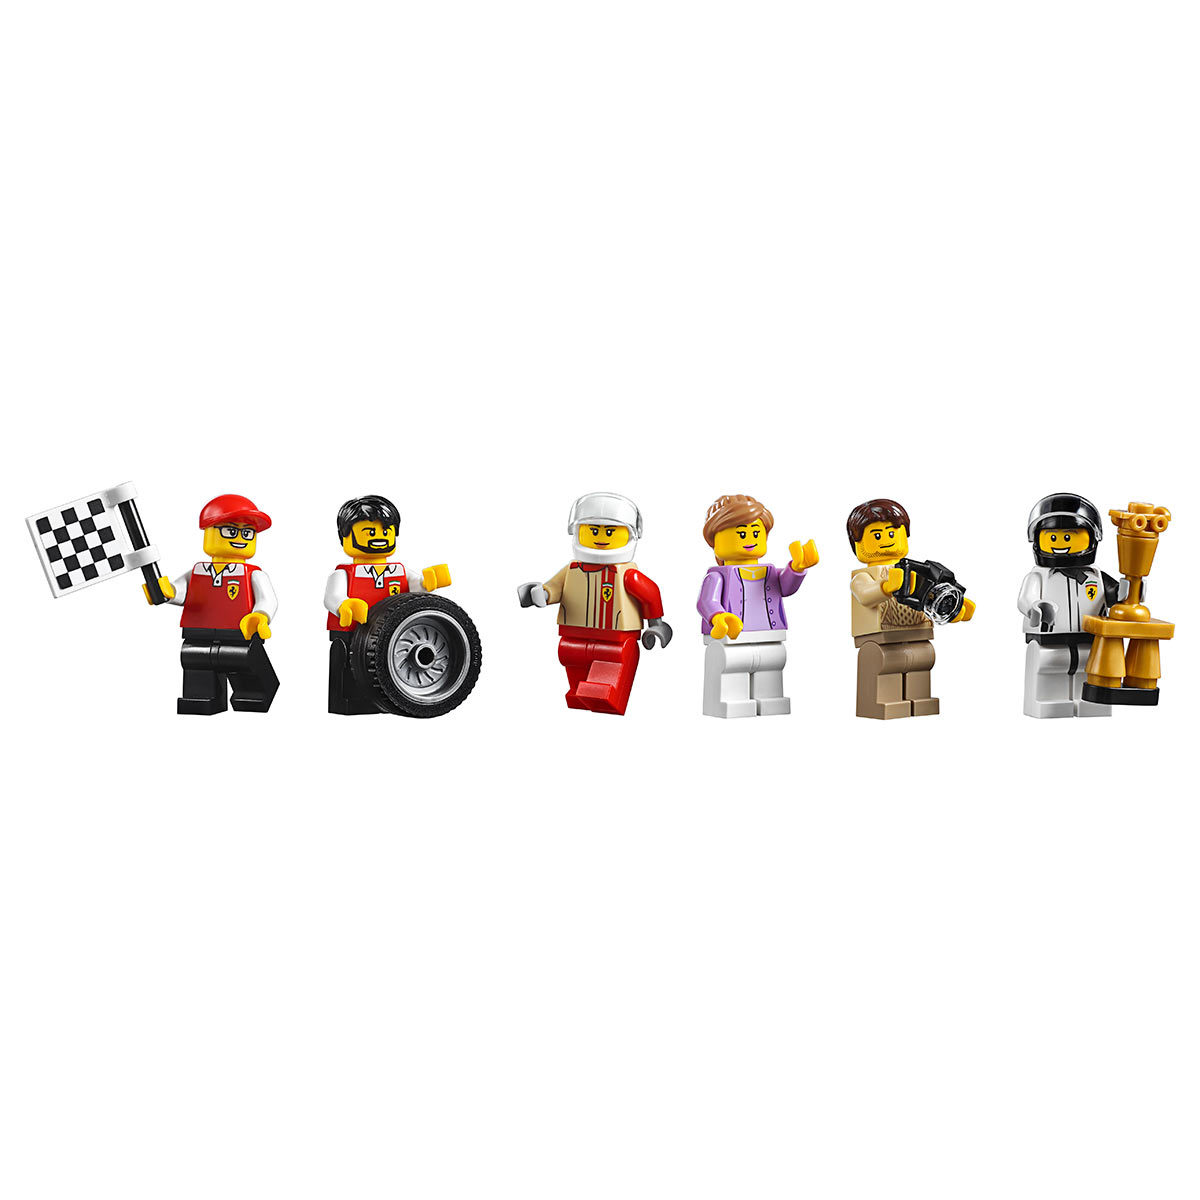 Lego ultimate Ferrari minifigures